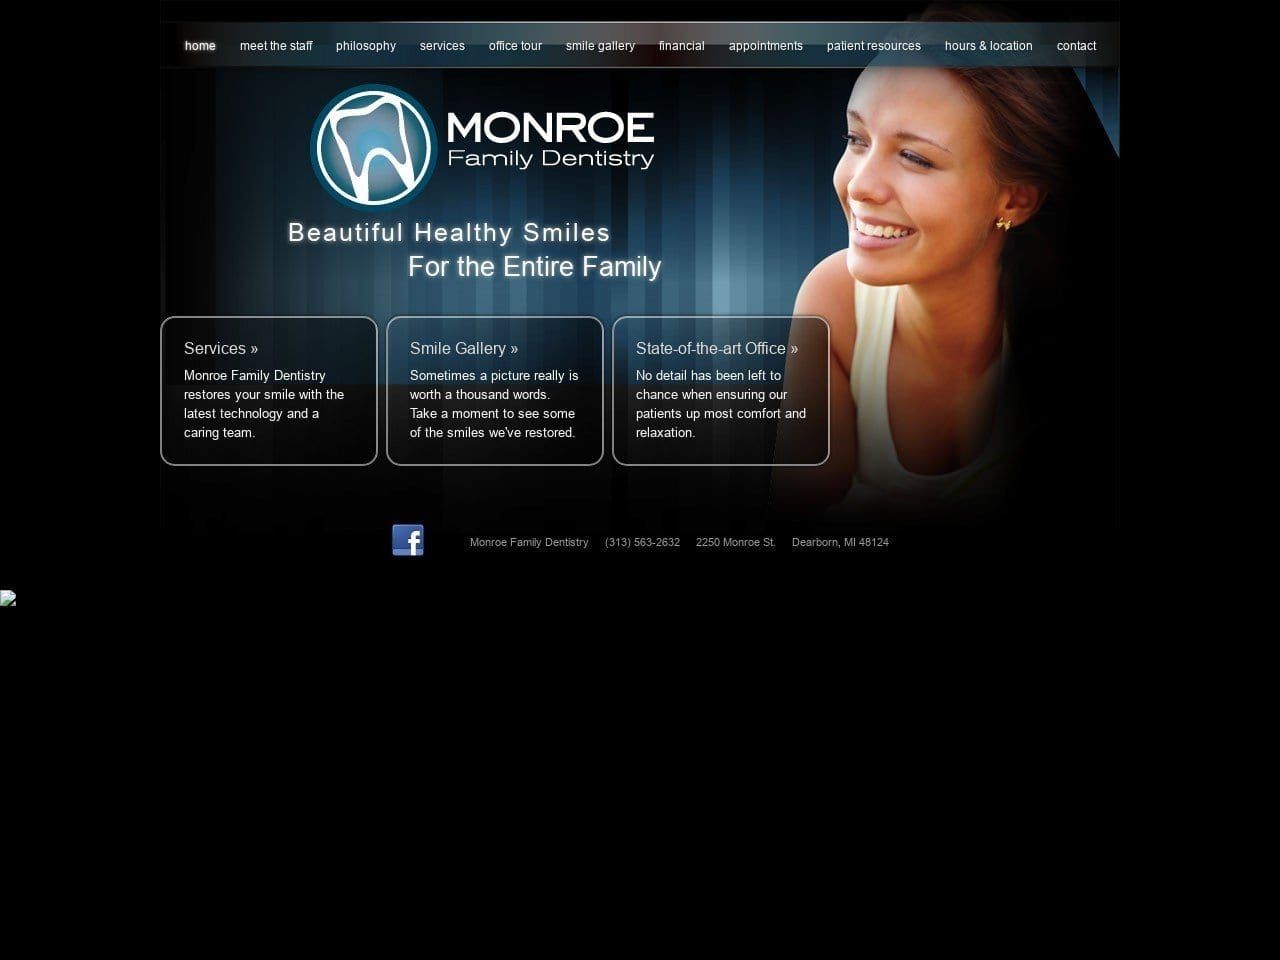 Monroe Family Dentist Website Screenshot from mfddearborn.com